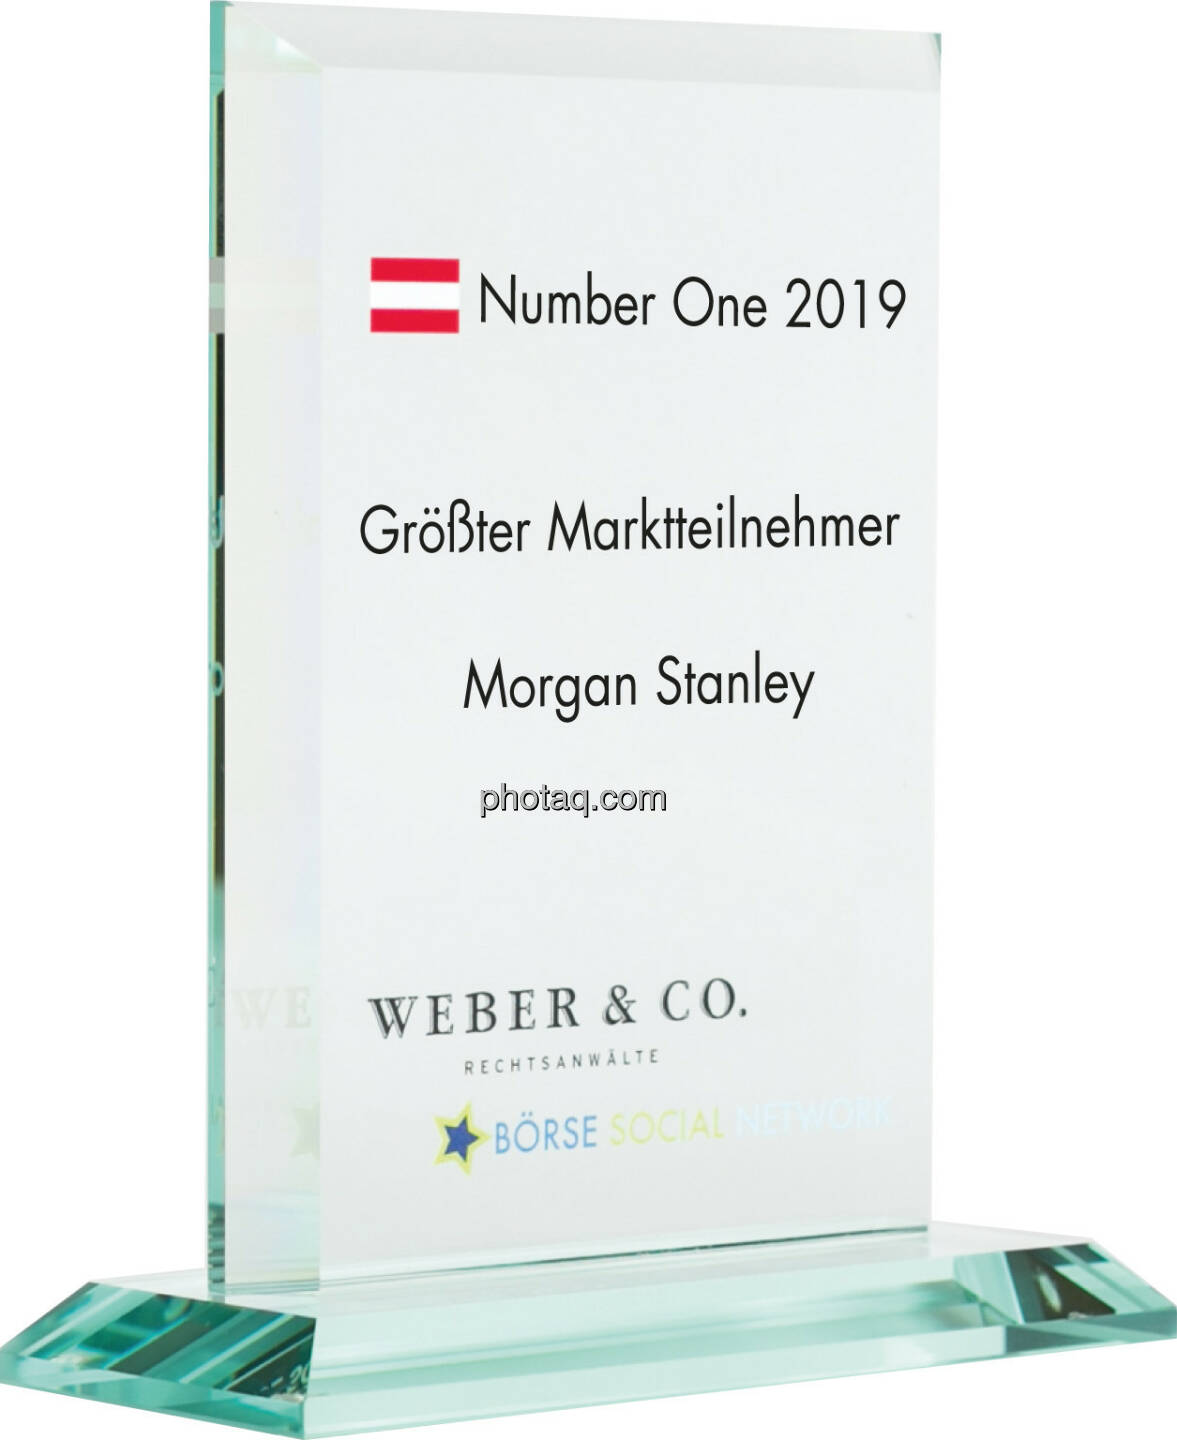 Number One Awards 2019 - Größter Marktteilnehmer Morgan Stanley